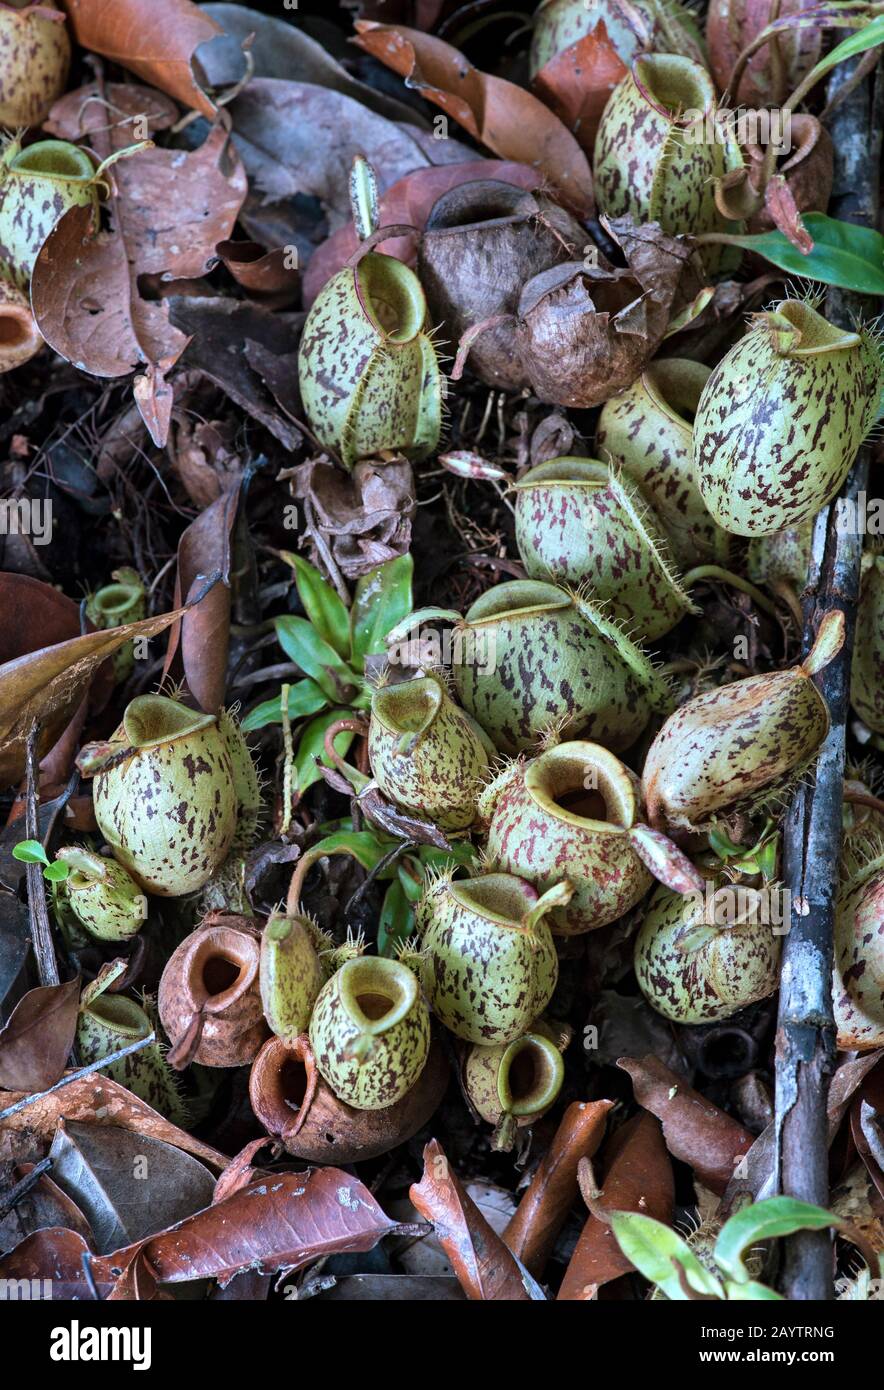 Cluster aus Erdkrügen von Nepenthes ampullaria in situ, Pitcher Plant Family (Nepenthaire), Kinabatangan River Flood Plain, Sabah, Borneo, Malaien Stockfoto